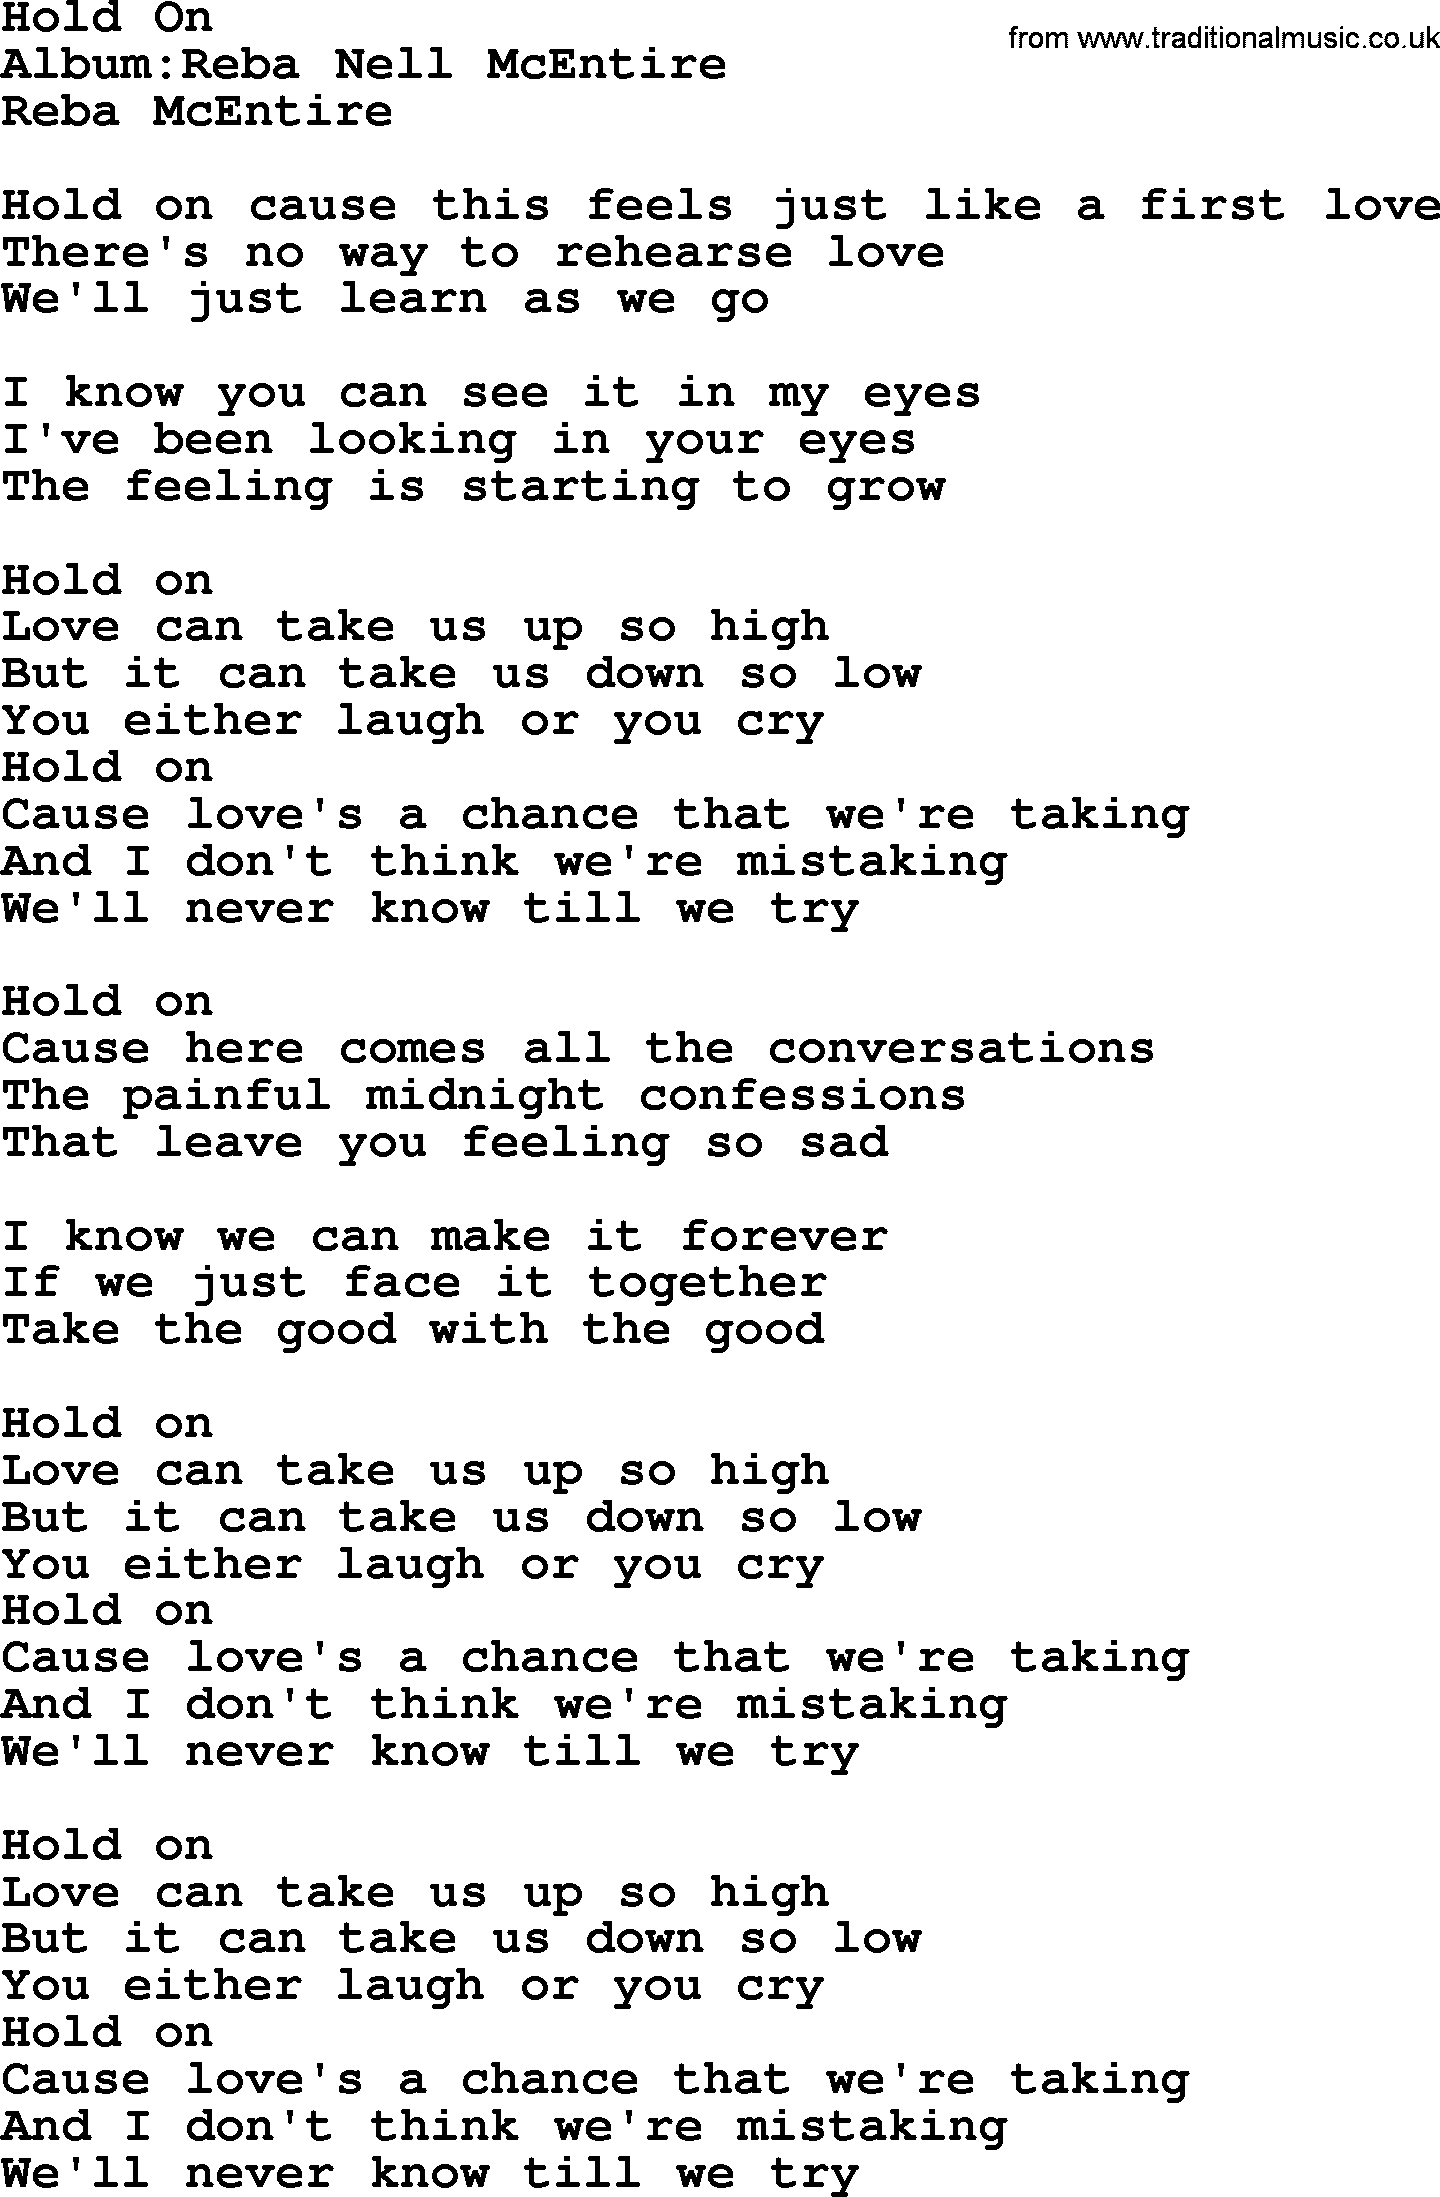 Reba McEntire song: Hold On lyrics